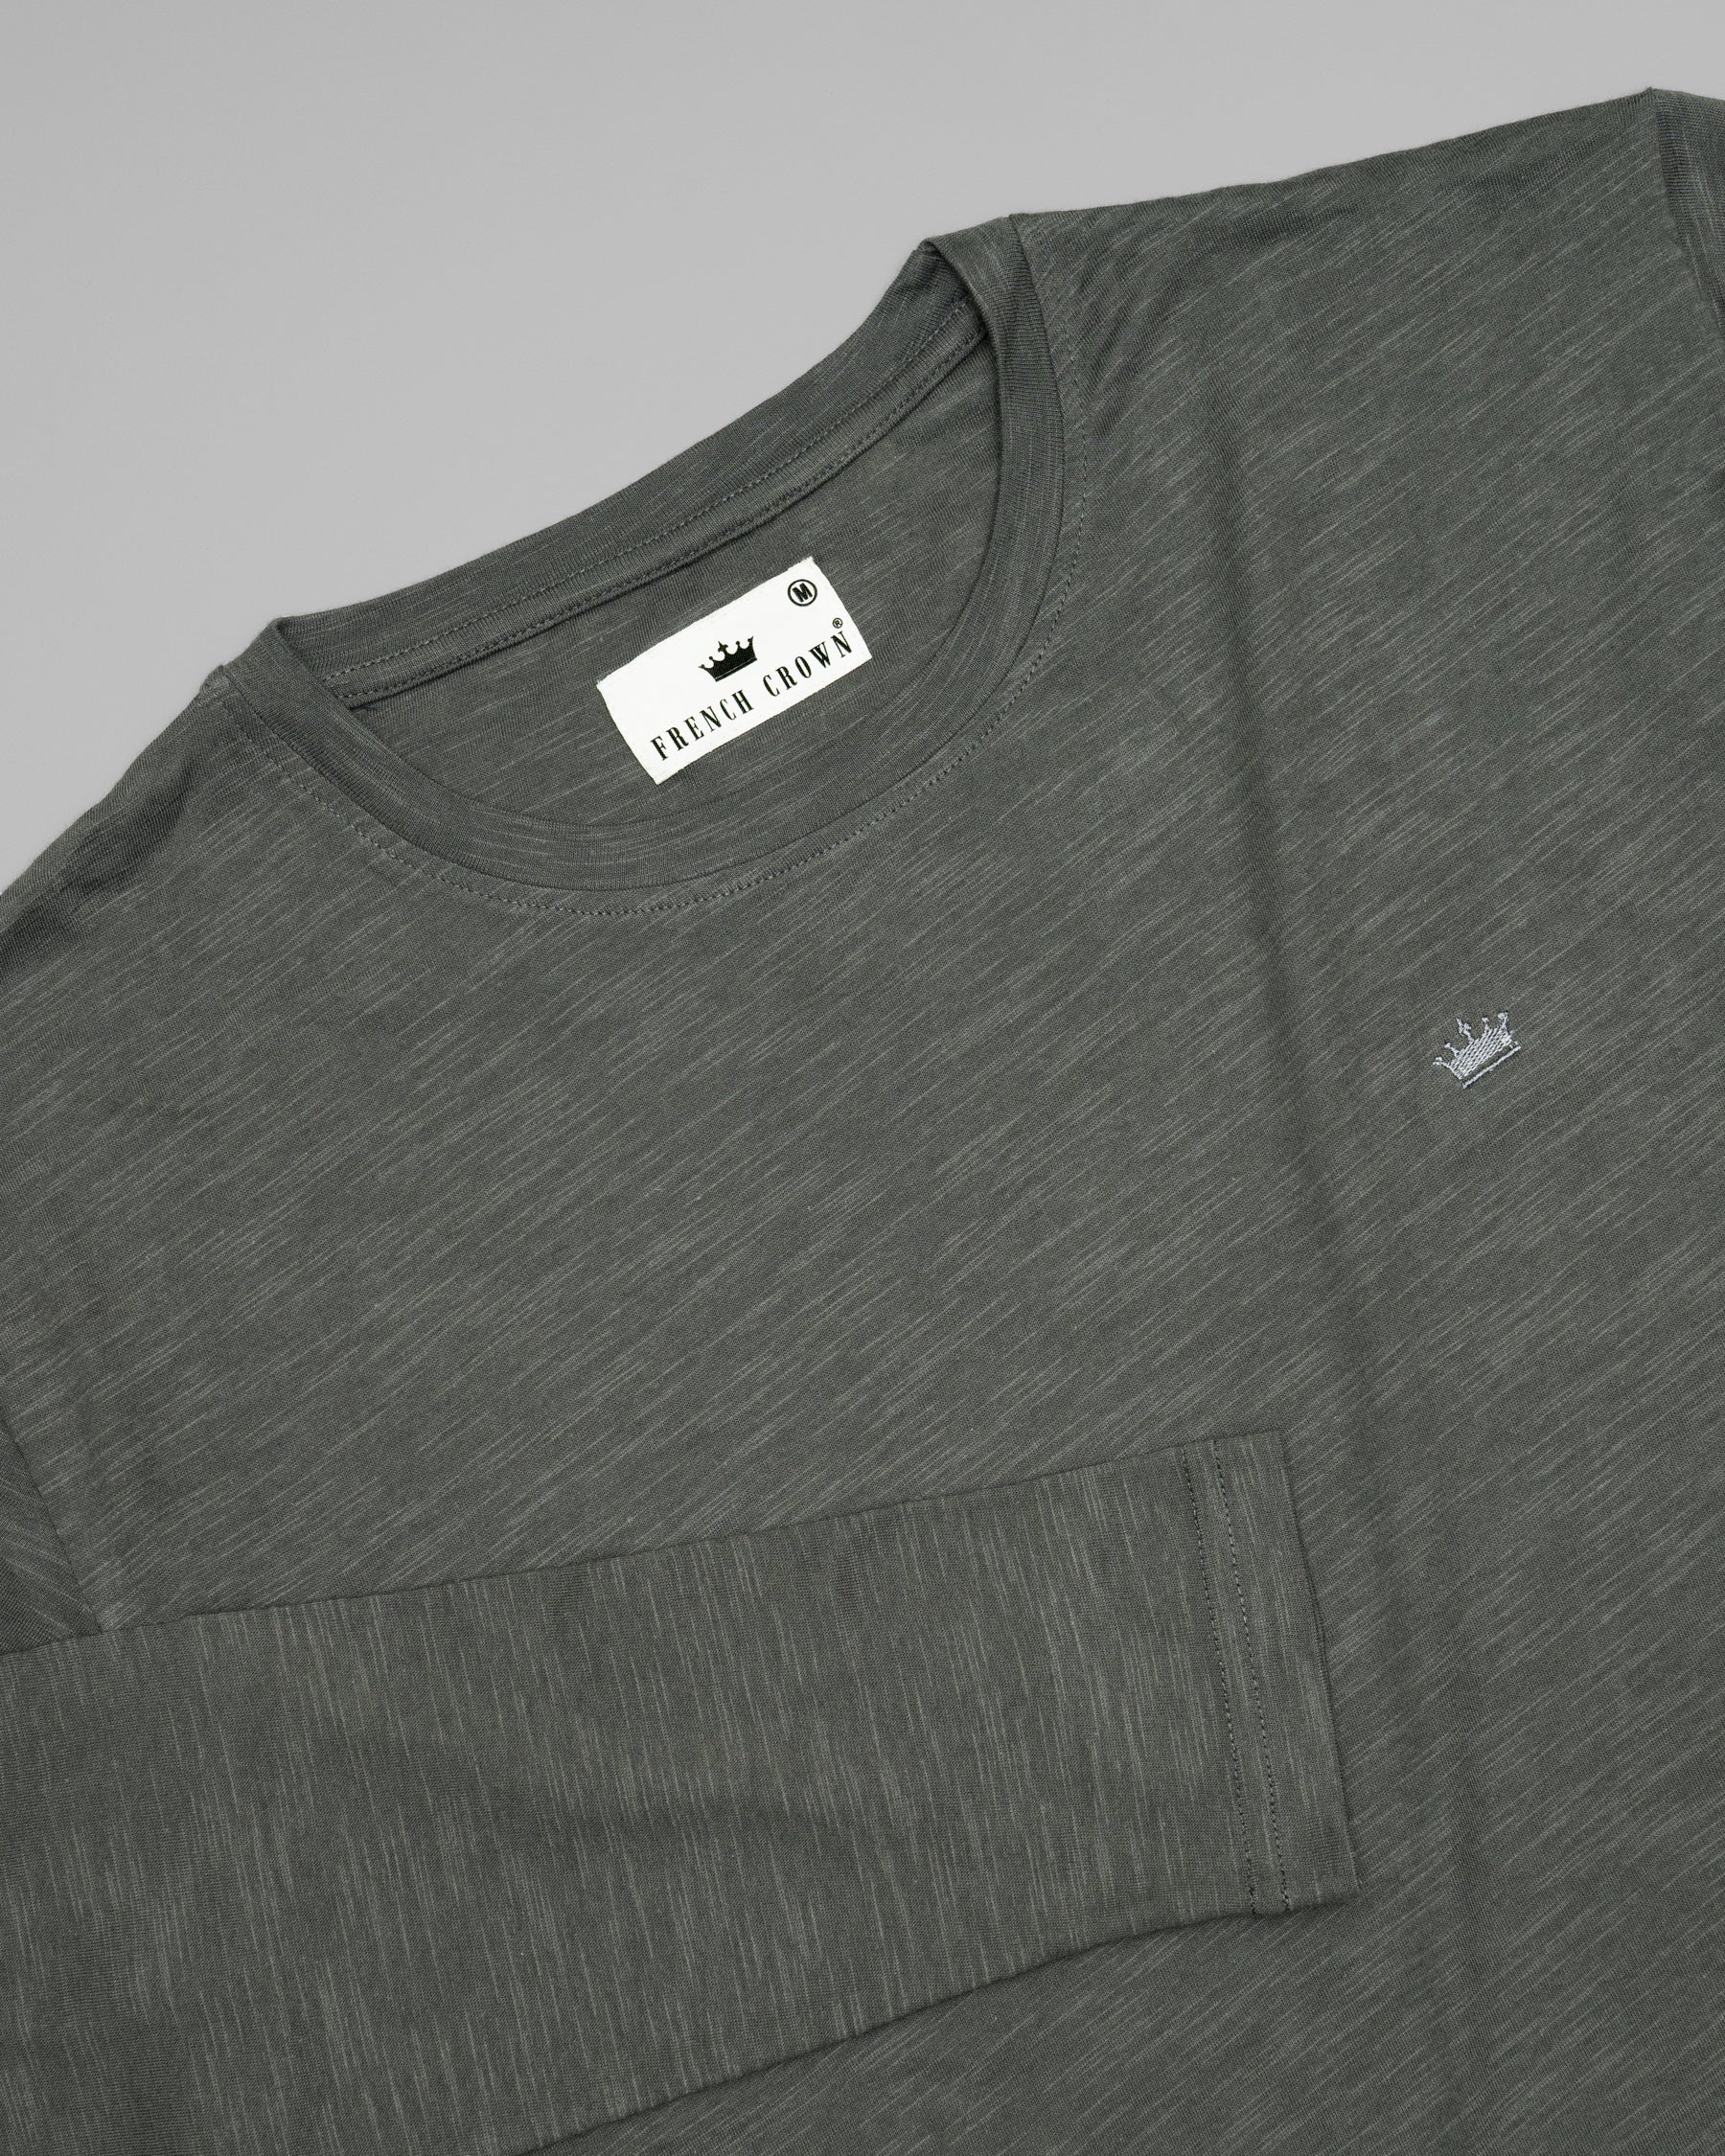 Fossil Grey Slubbed Full-Sleeve Super soft Supima Organic Cotton Jersey T-shirt TS145-XL, TS145-S, TS145-M, TS145-L, TS145-XXL